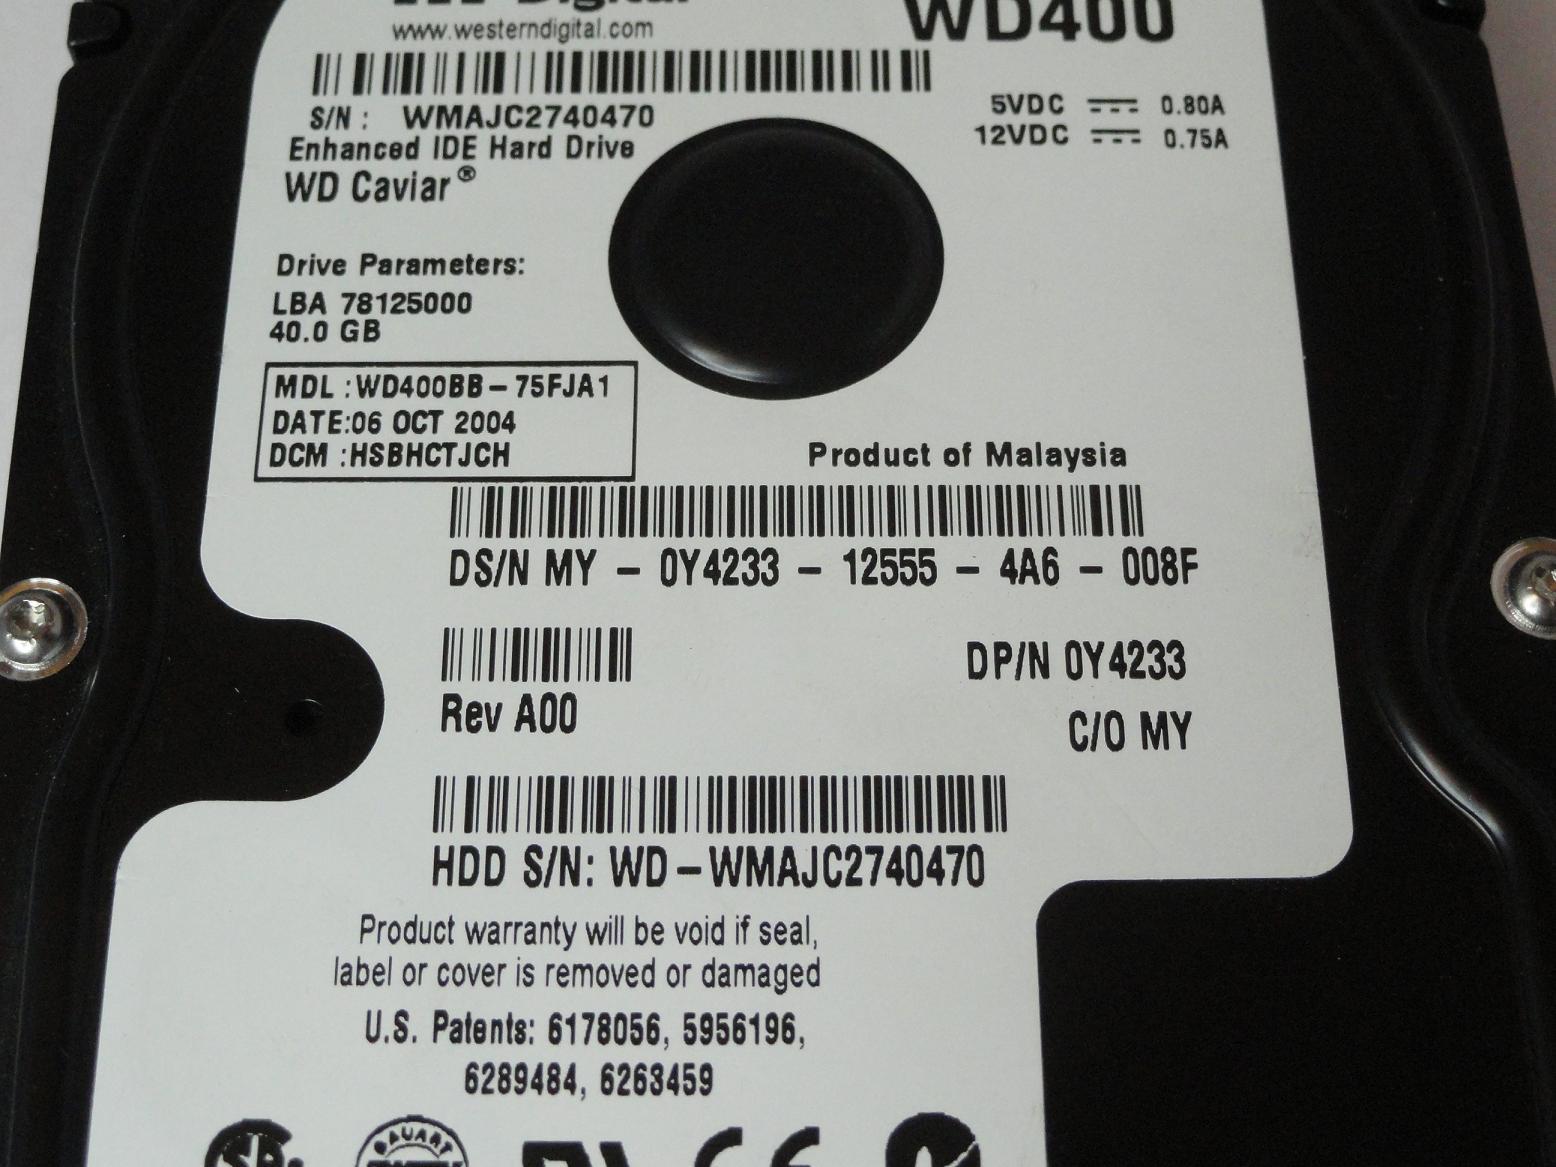 MC6391_WD400BB-75FRA0_Western Digital Dell 40GB IDE 7200rpm 3.5in HDD - Image3